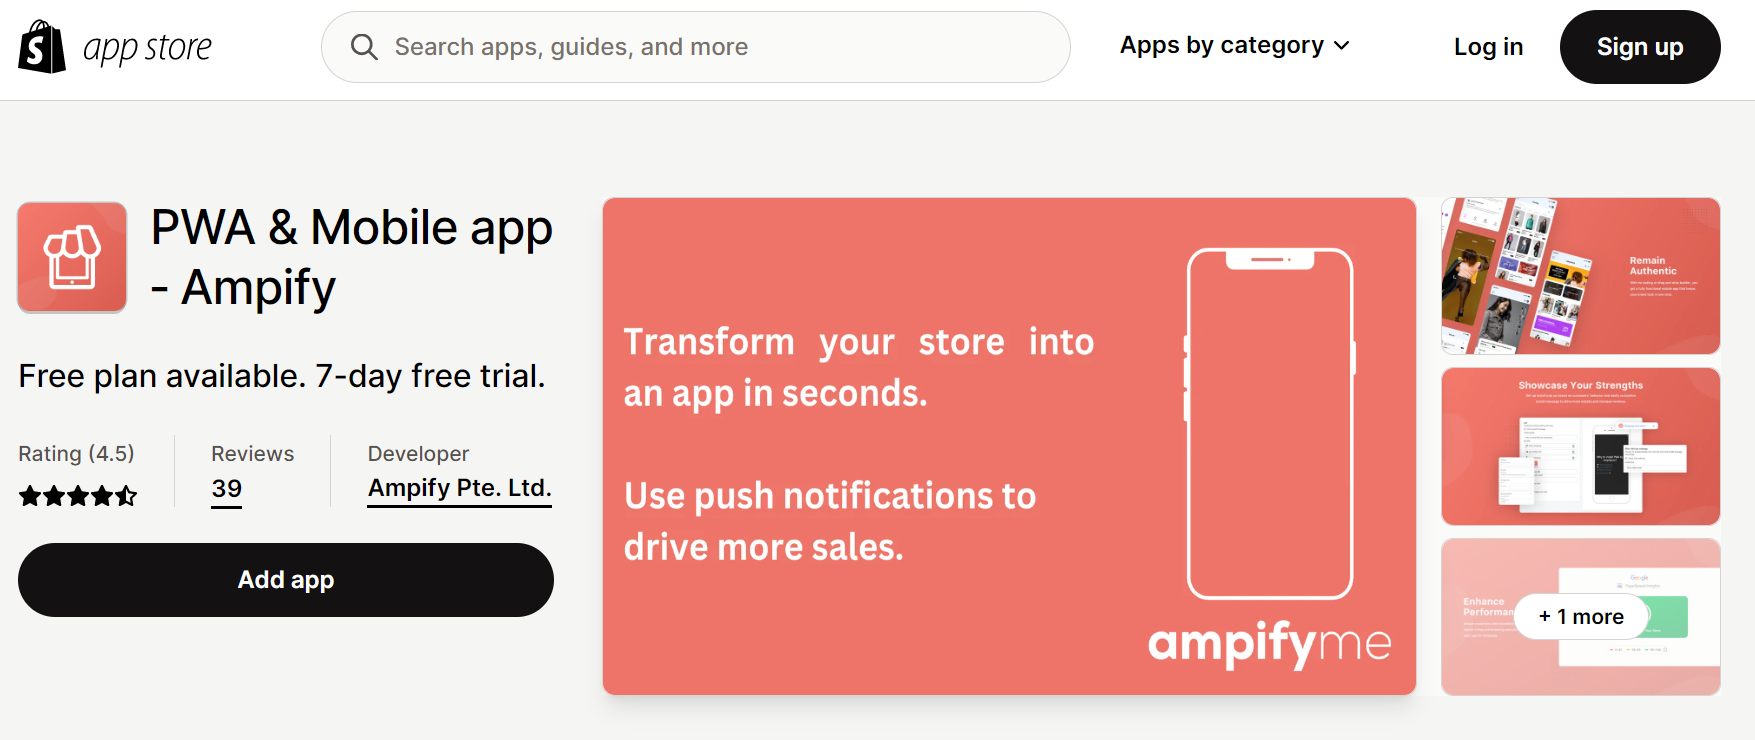 PWA & Mobile app ‑ Ampify